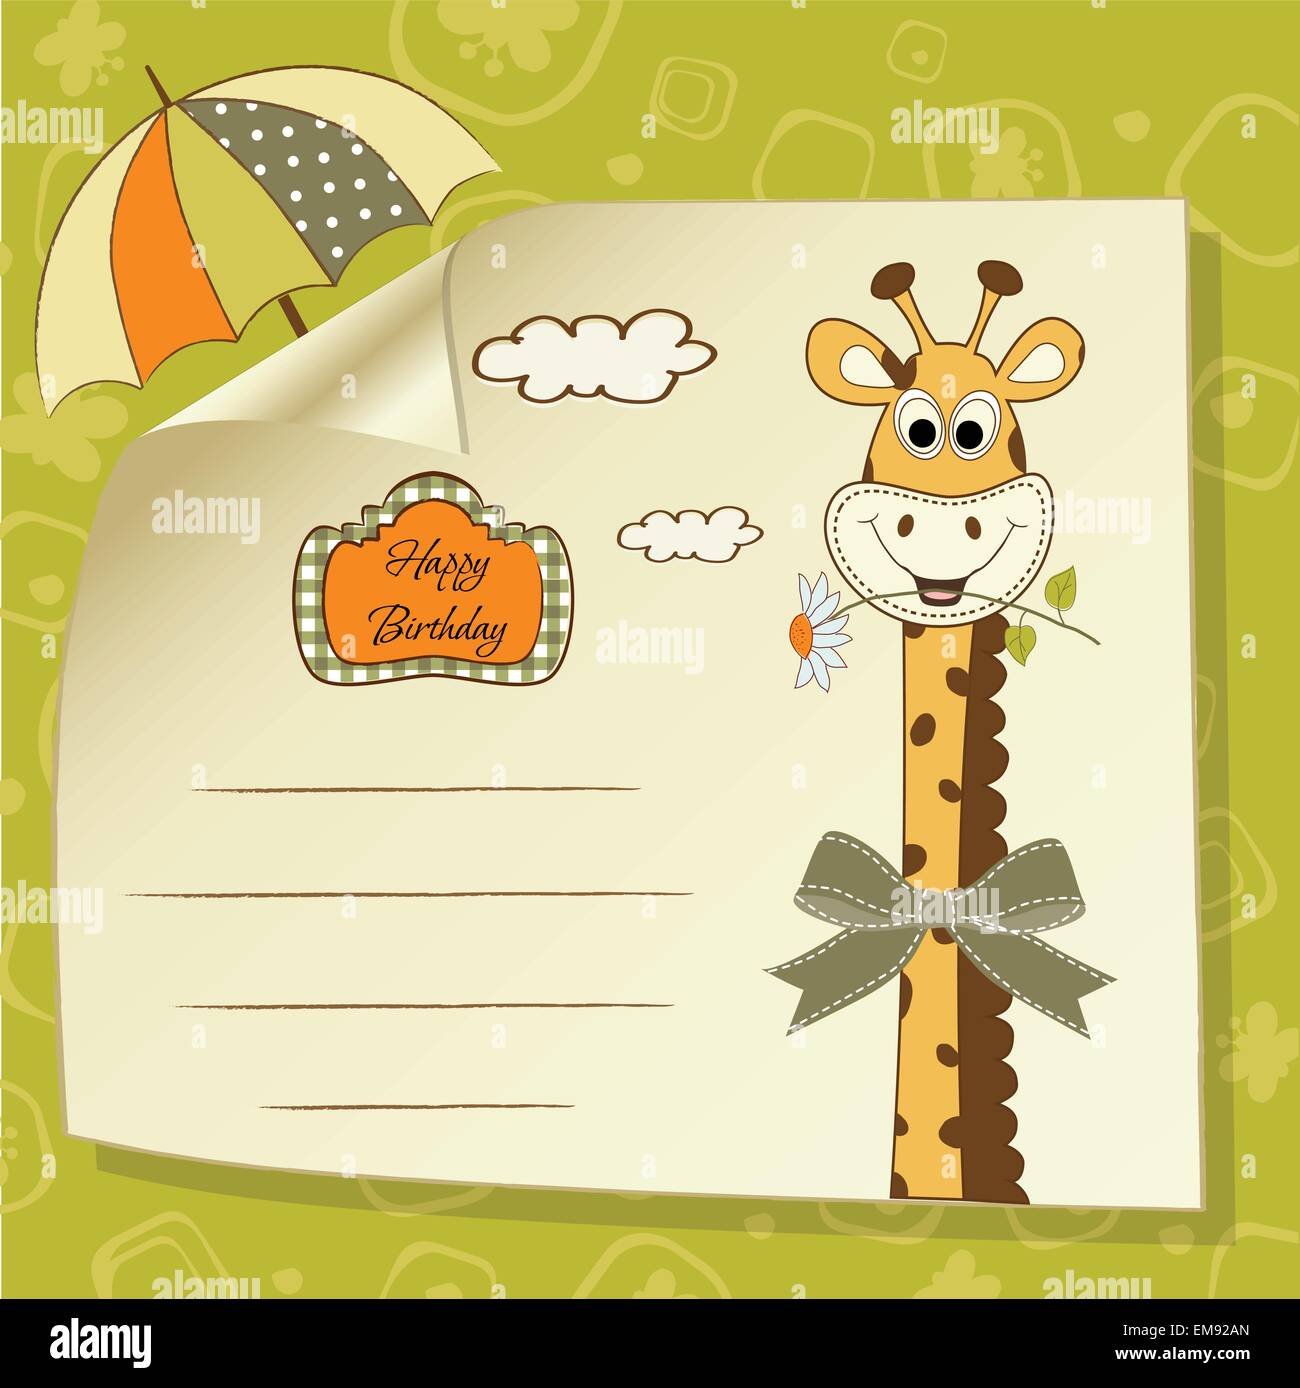 birthday greeting card with giraffe Stock Vector